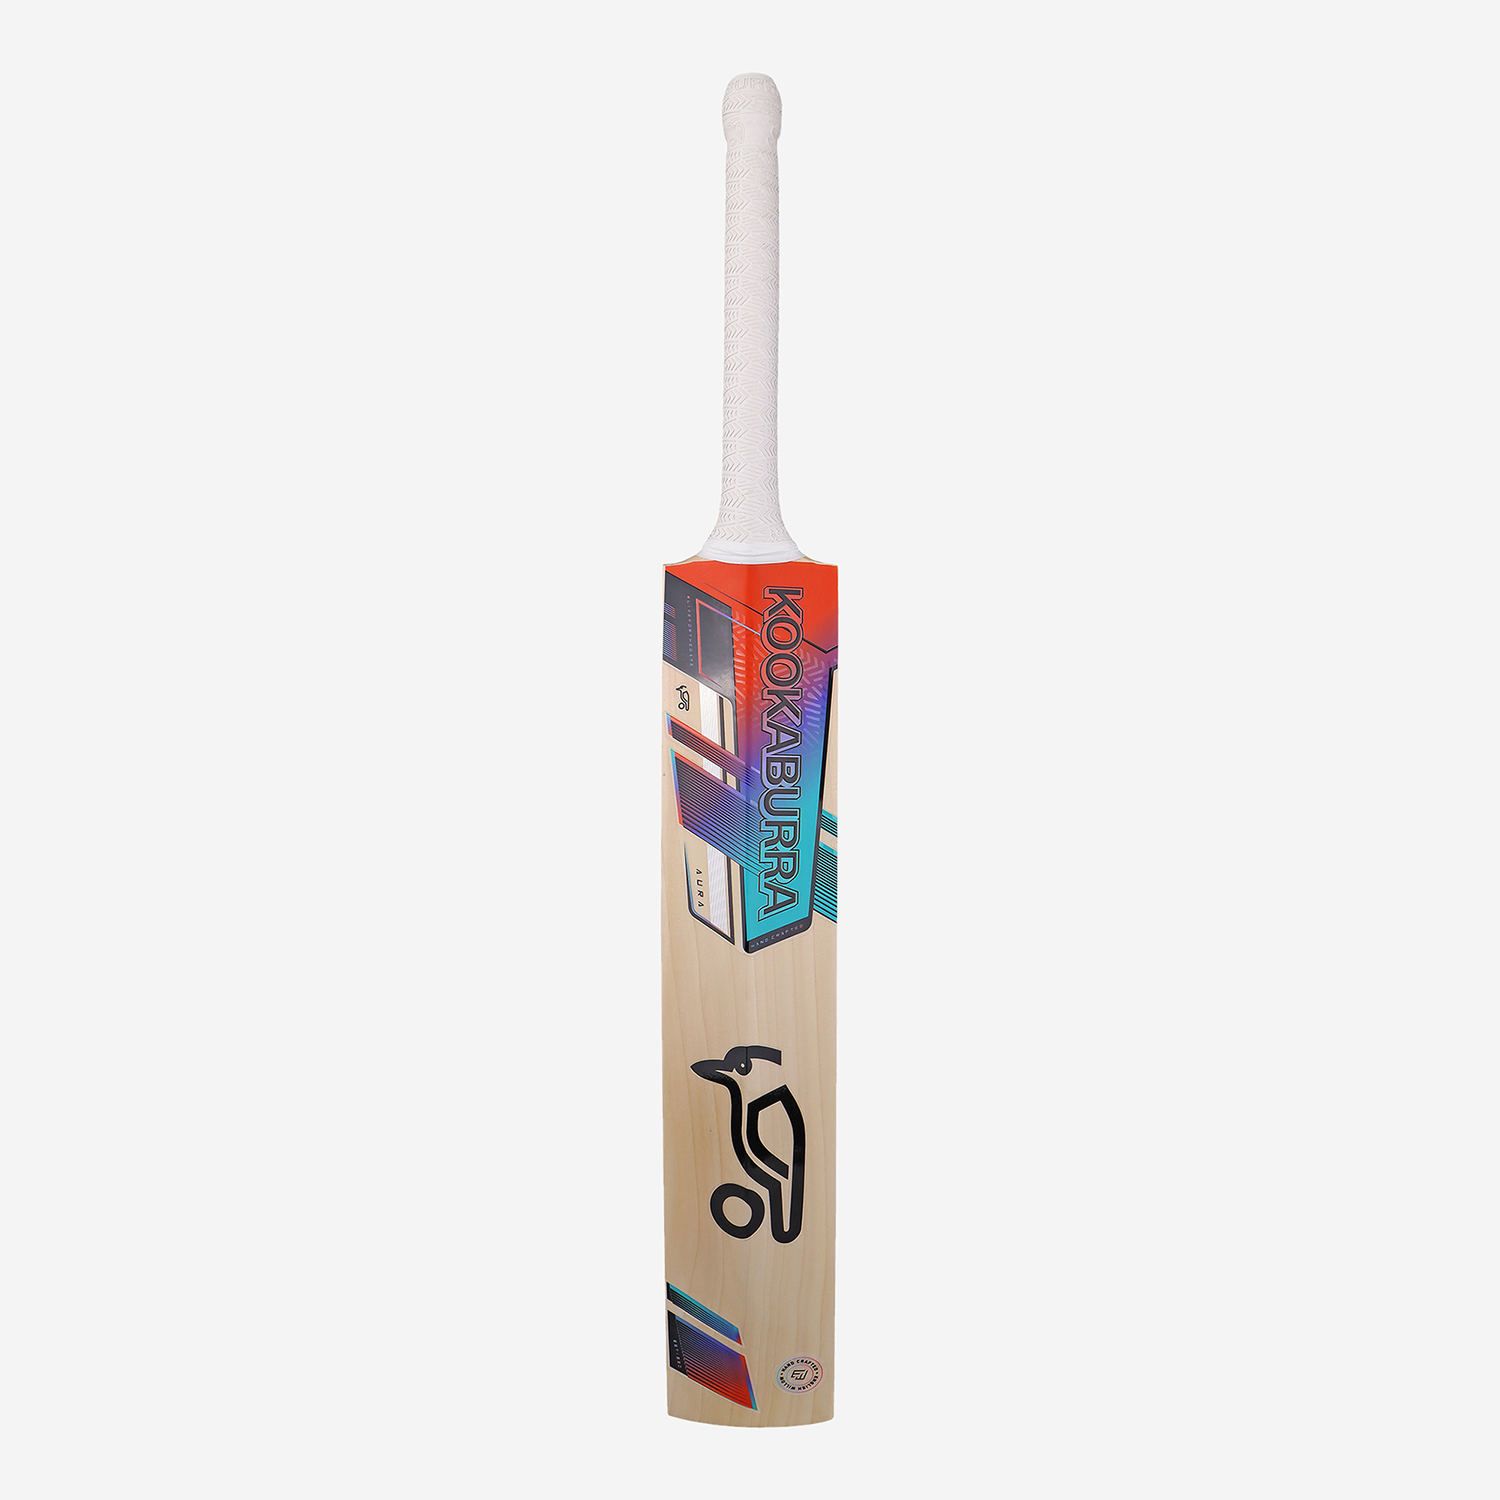 Alex Carey Players Replica Cricket Bat